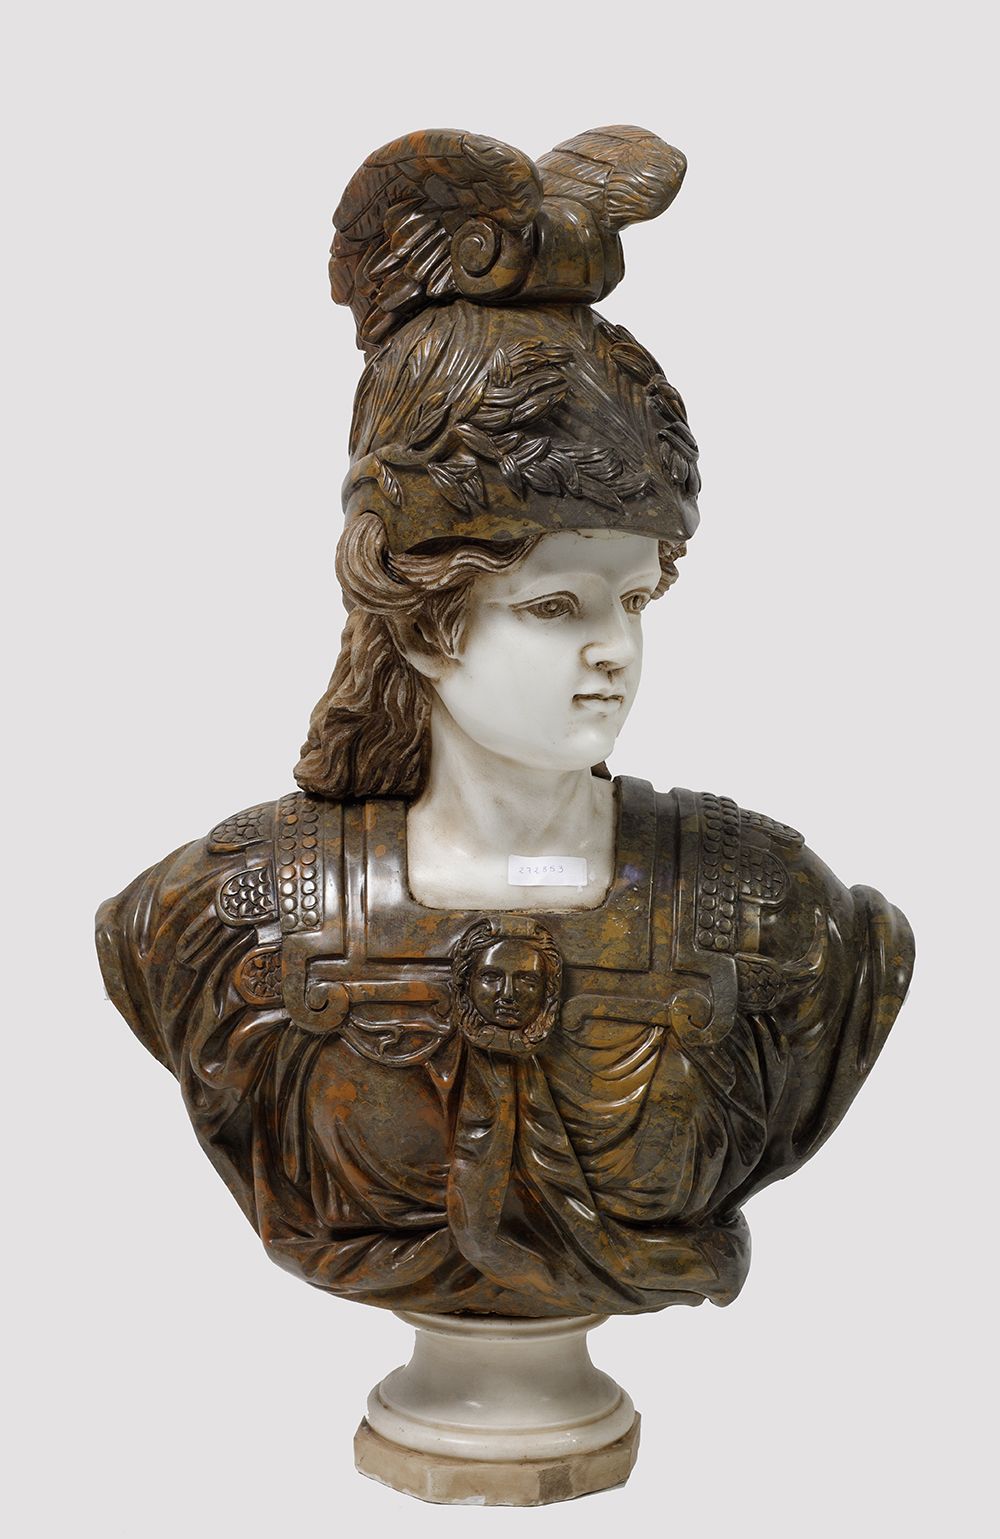 ANONYMOUS (20th century) "Bust" 遵循18世纪的模式。87厘米高。大理石雕塑